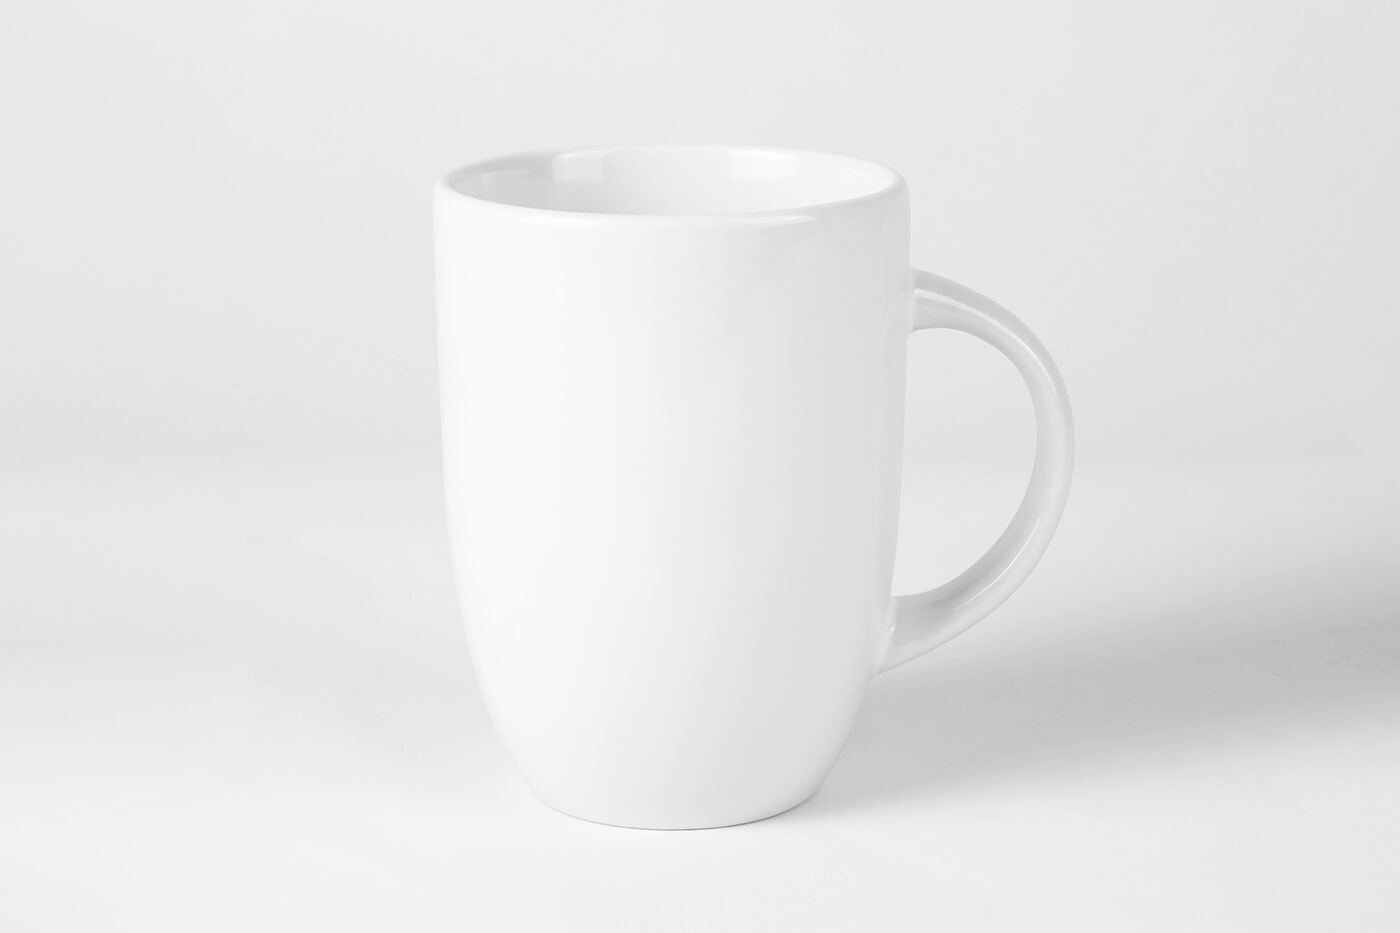 Free Standing Ceramic Mug Mockup